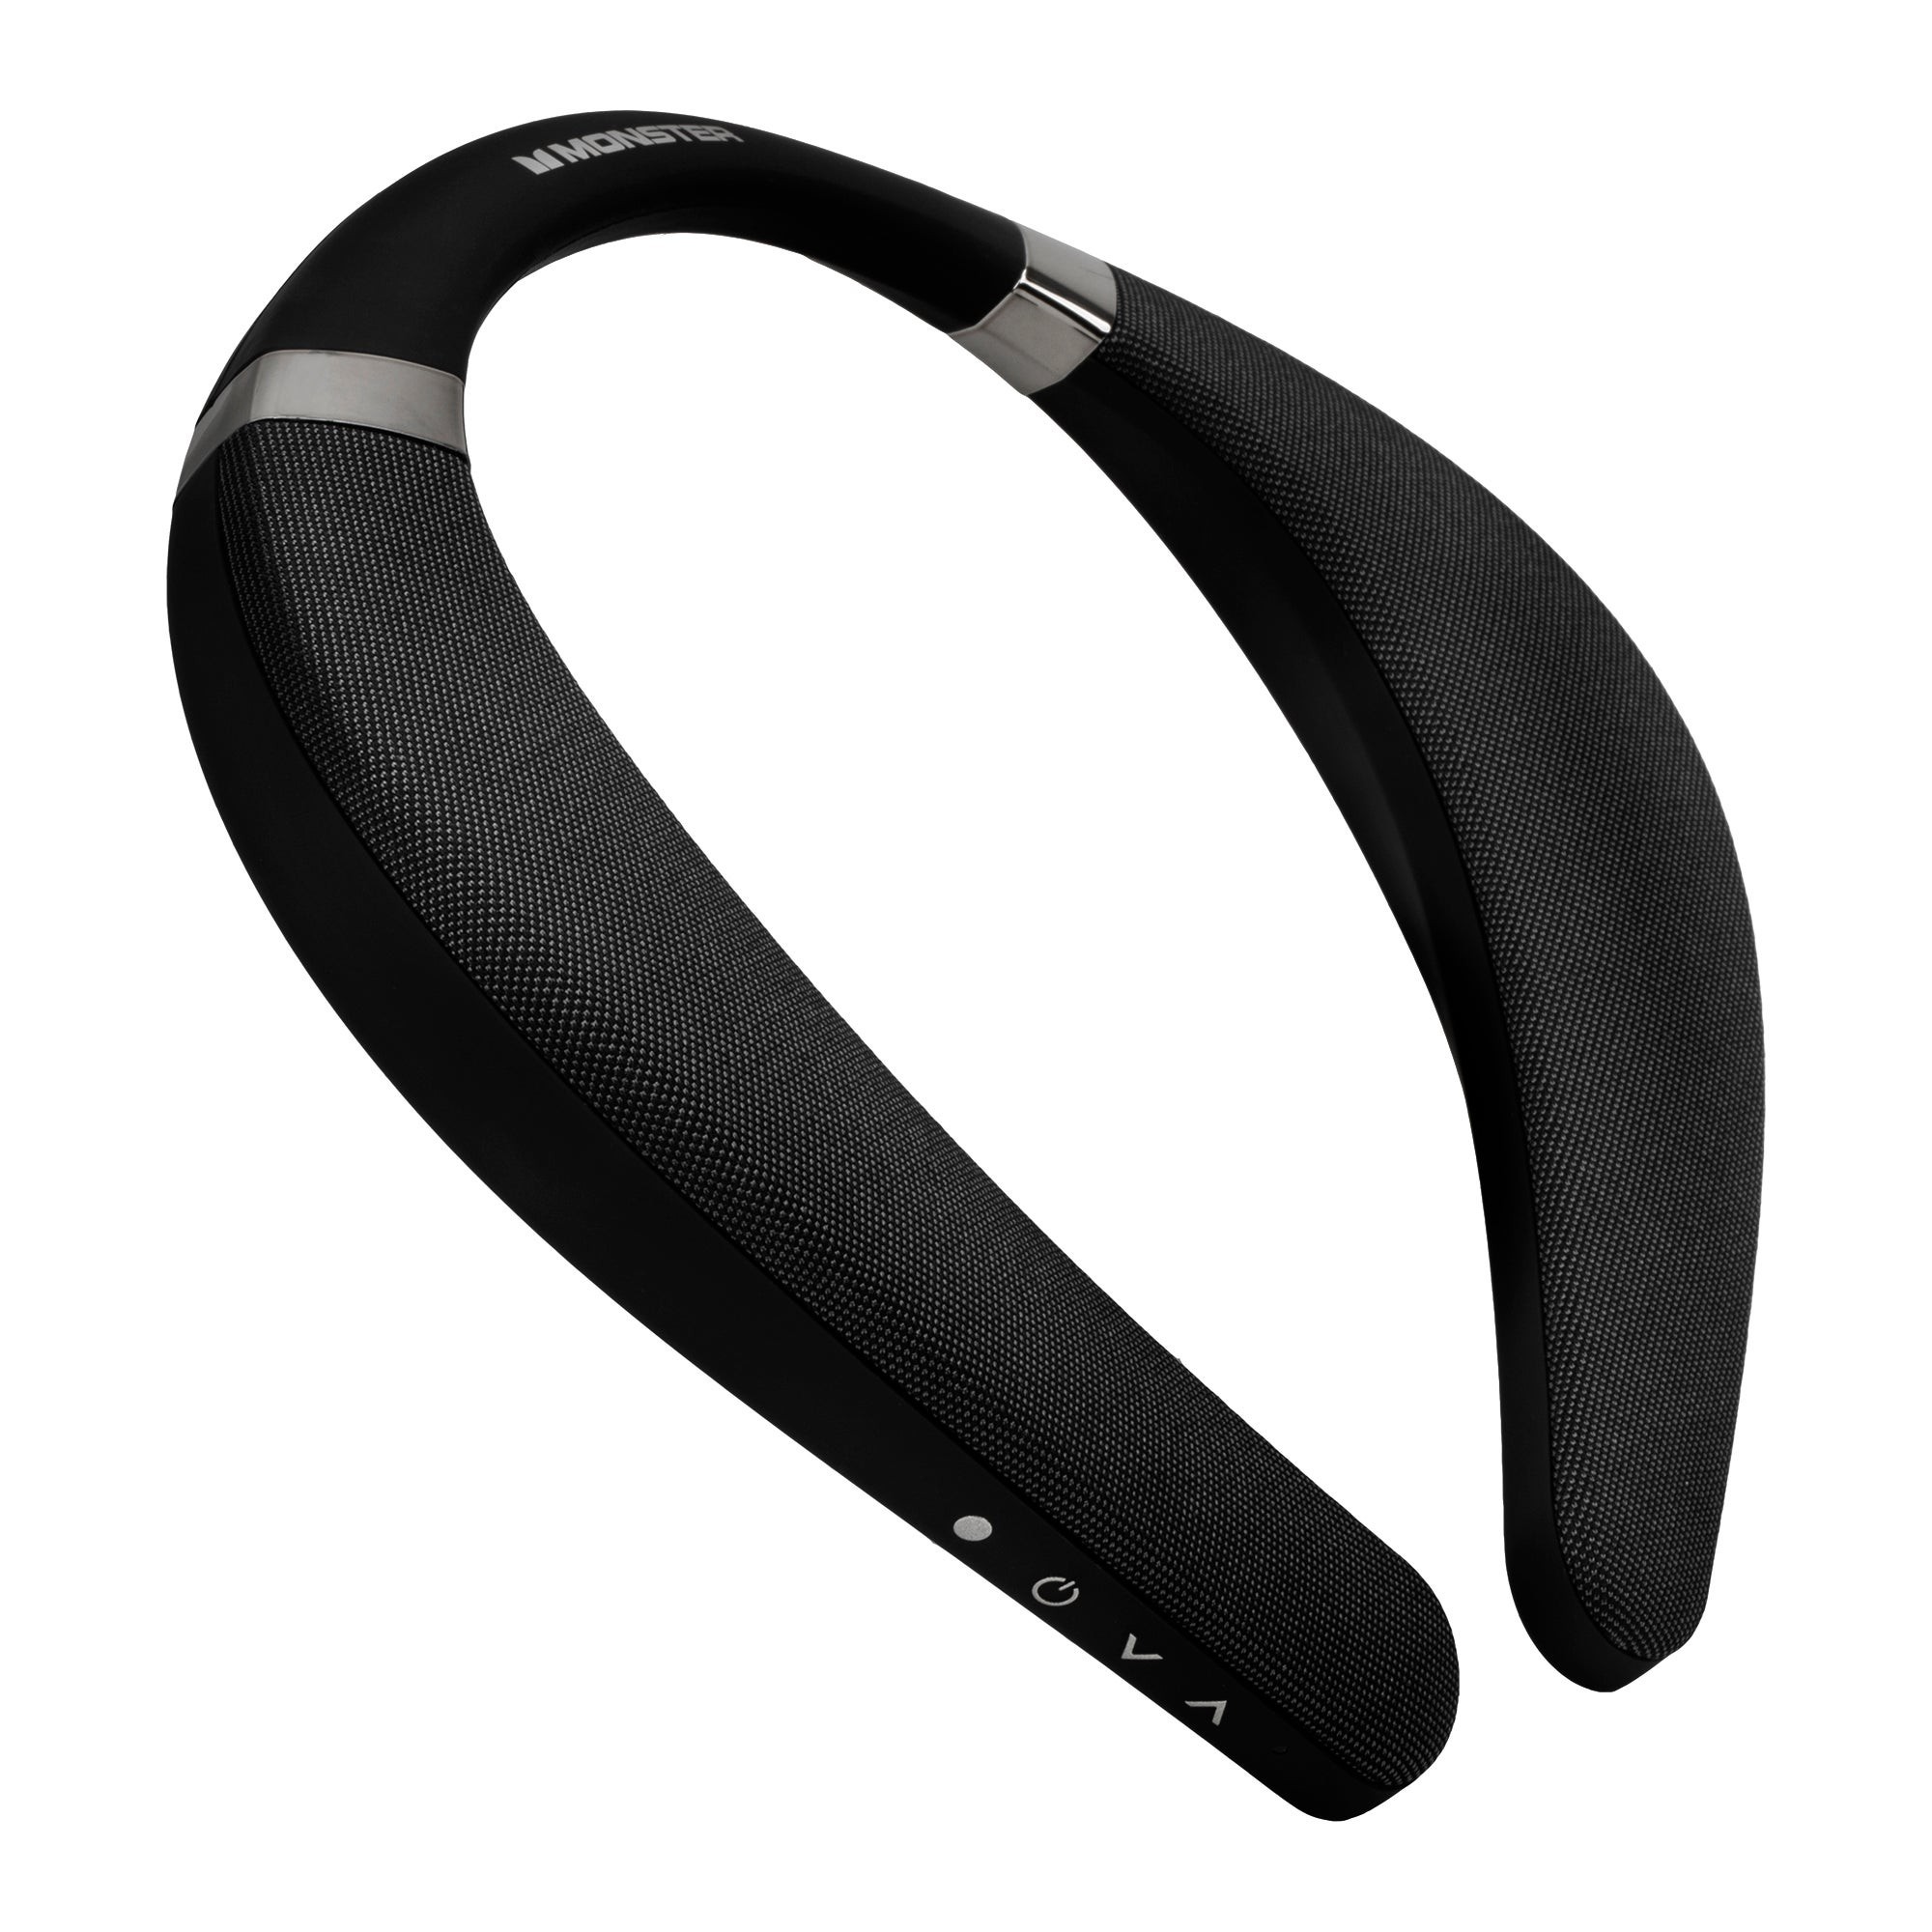 Boomerang Neckband Bluetooth Speaker w/ Mic Black/Gunmetal